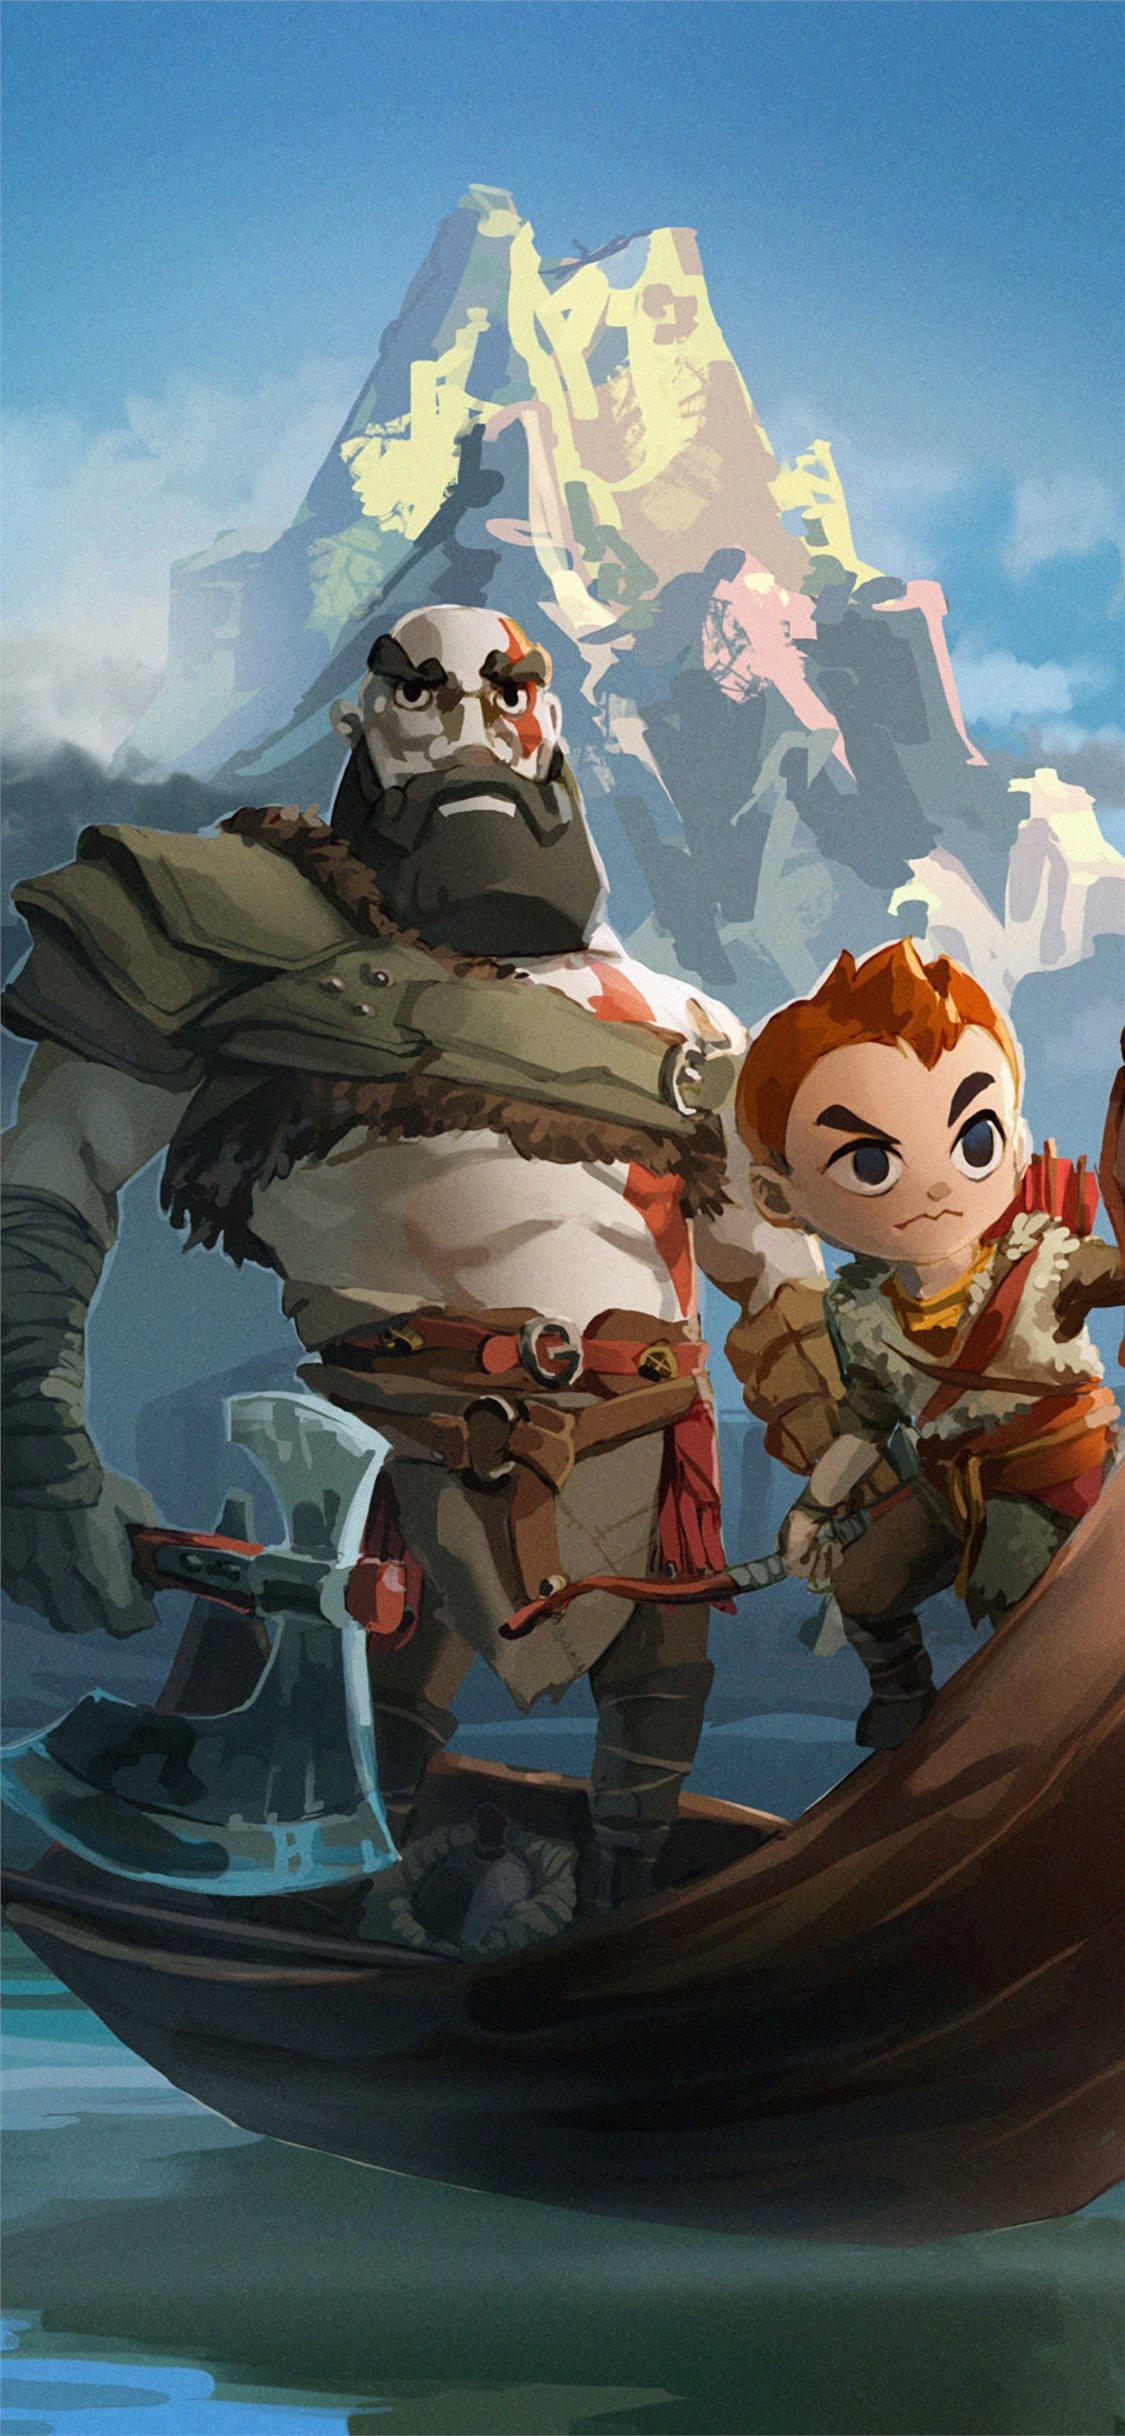 kratos and atreus god of war art 4k iPhone Wallpaper Free Download